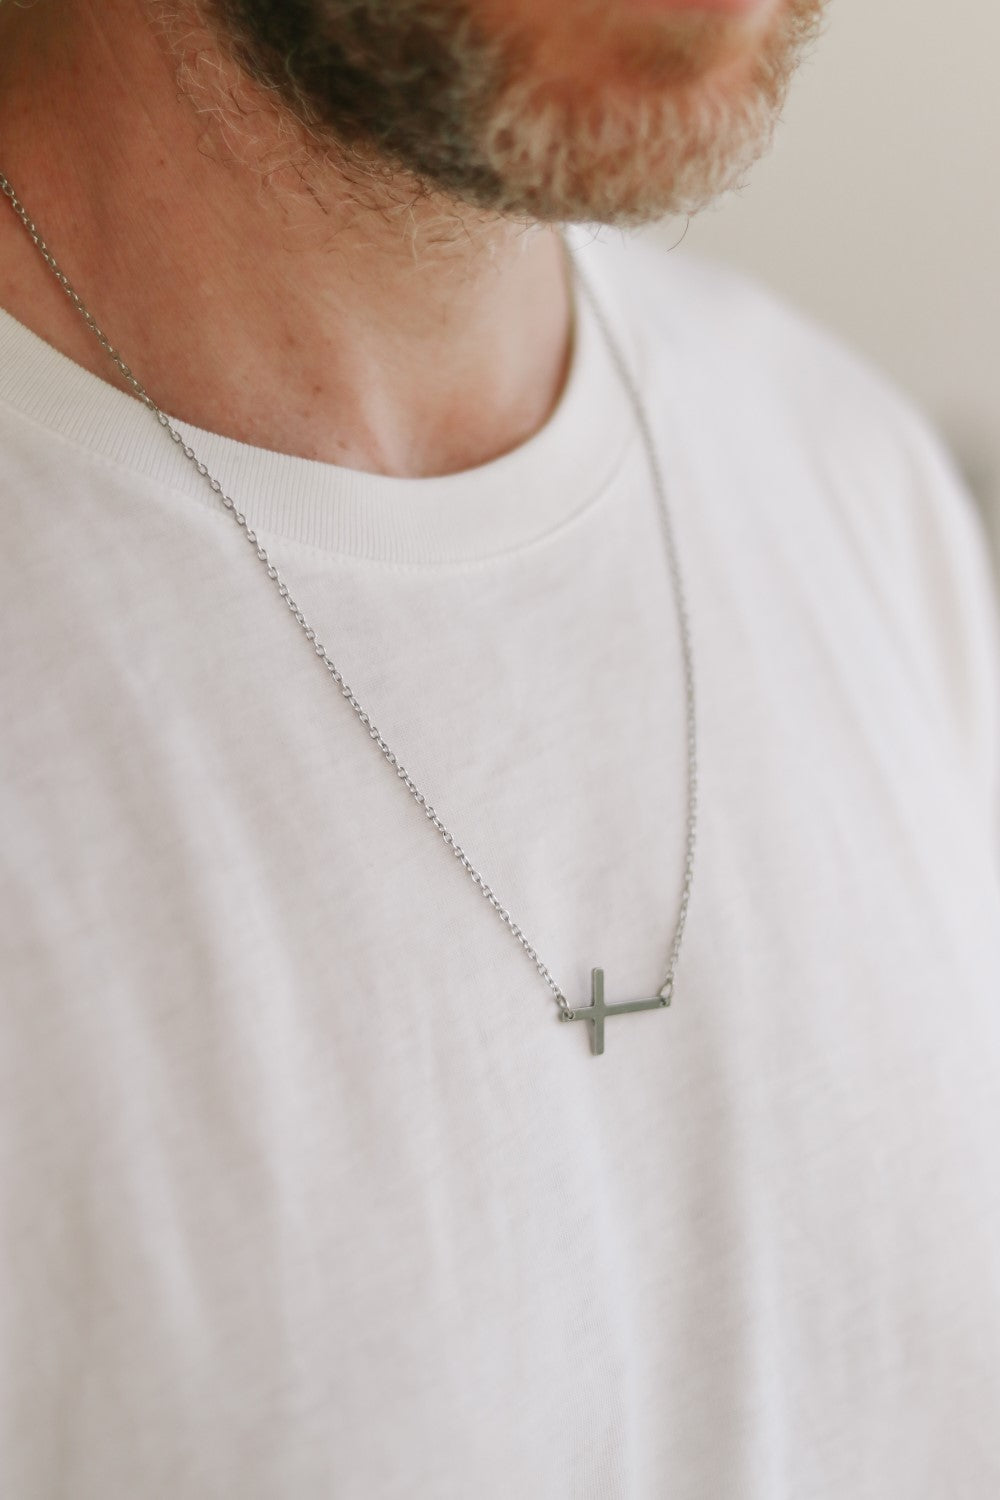 Catholic Necklace For Men Women Kids - Choose Saint Pendant| MedjugorjeGifts